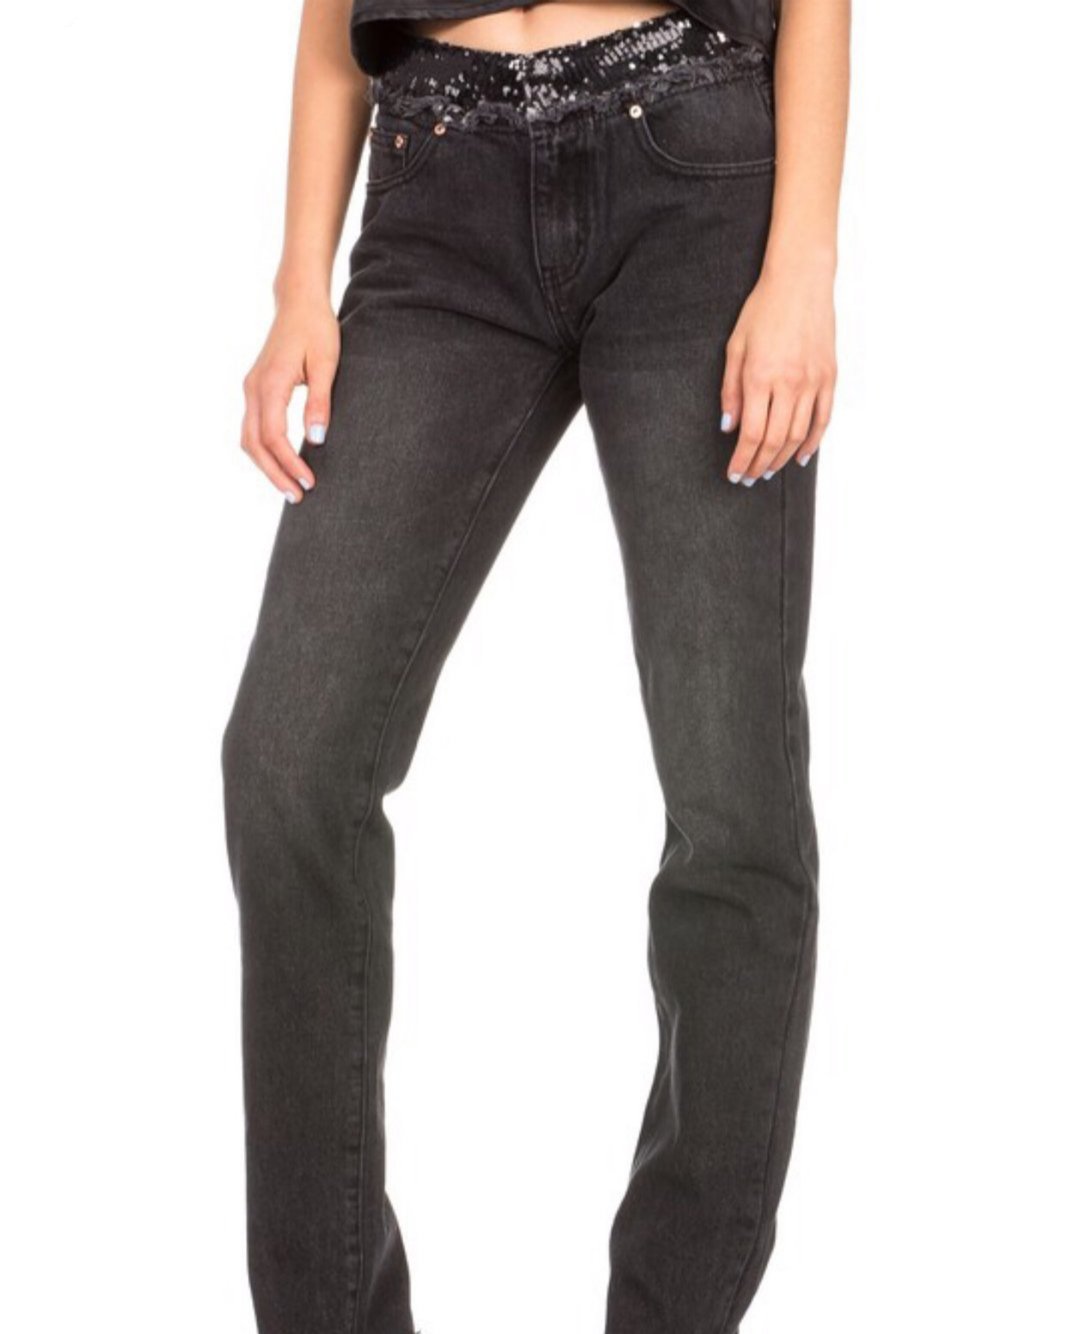 Black Sequin Distressed Jeans